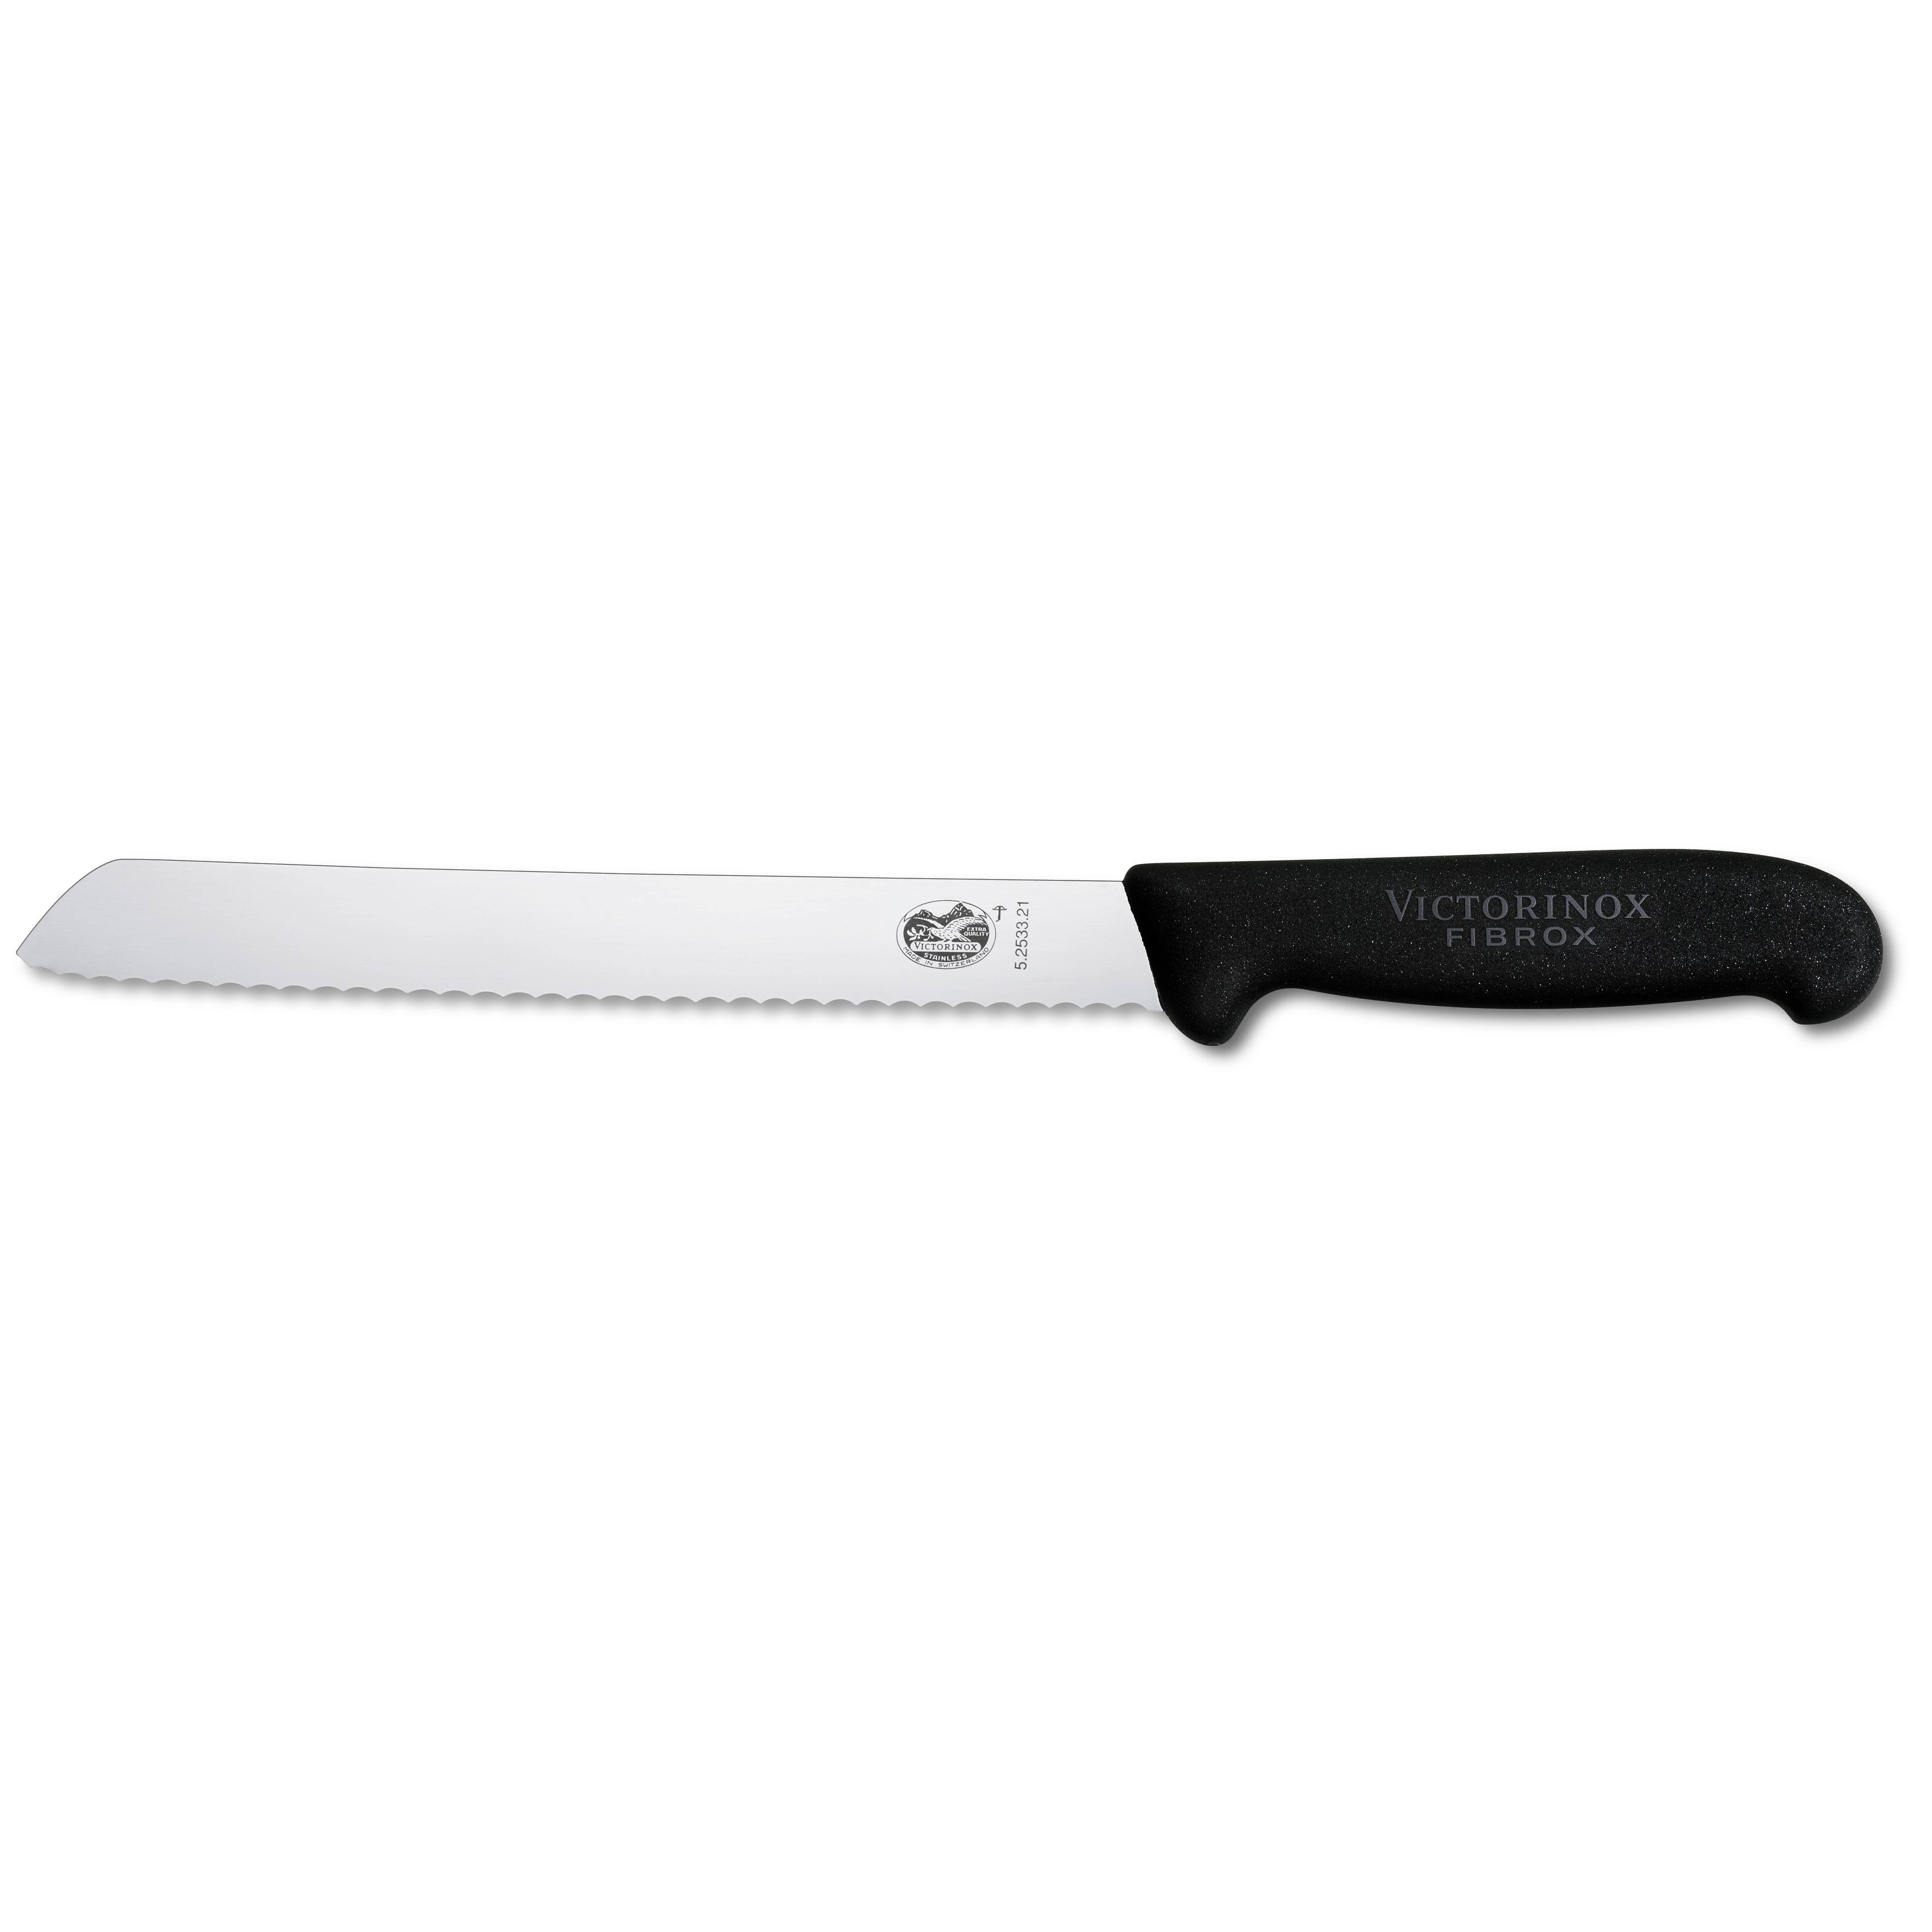 Victorinox Bread Knife - 21cm, Serrated Edge